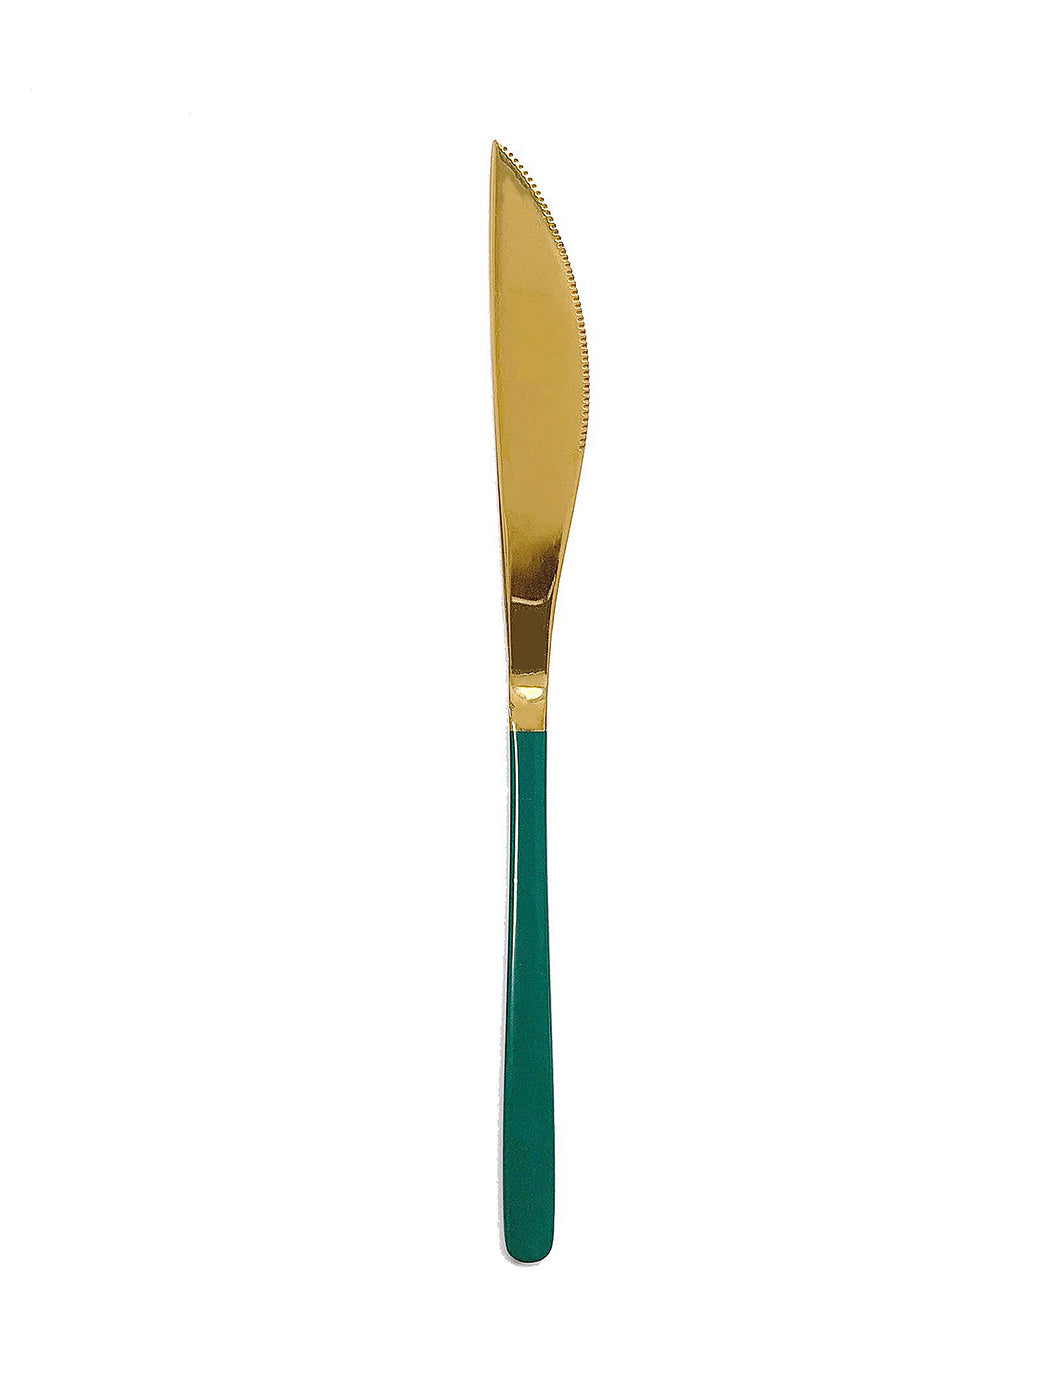 MINISO LIGHT LUXURY GOLDEN KNIFE WITH LONG HANDLE (GREEN & GOLDEN) 2010420310106 KNIFE/ FORK/ SPOON/CHOPSTICKS